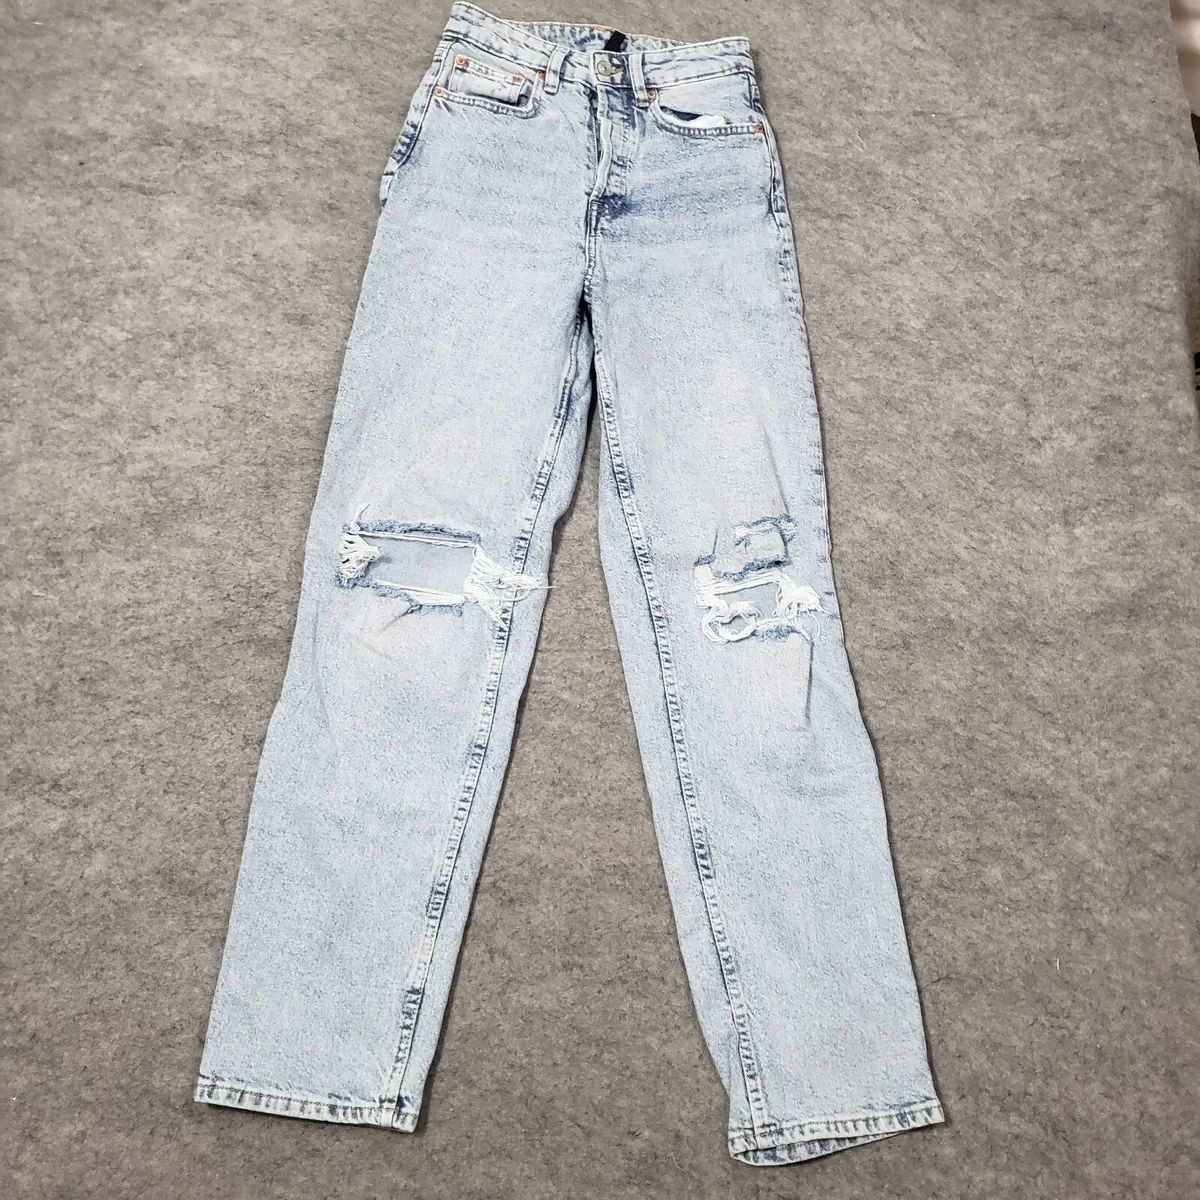 HM Divided Jeans 2 Mom High Rise Light Wash Distressed Denim Pants | eBay